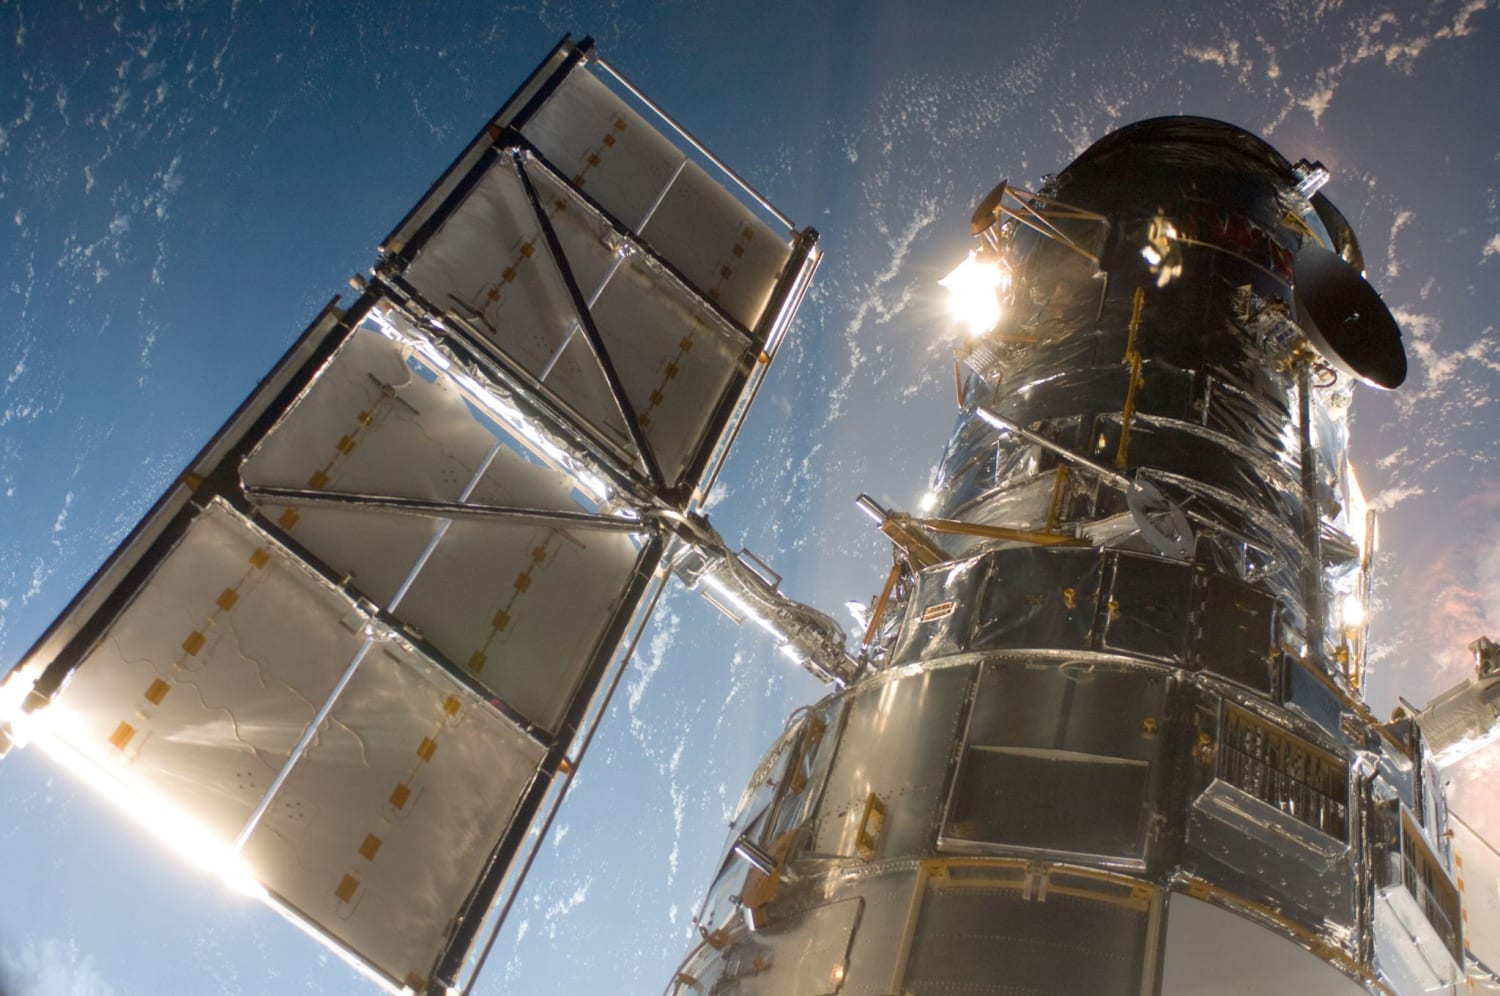 Hubble Space Telescope enters 'safe mode'